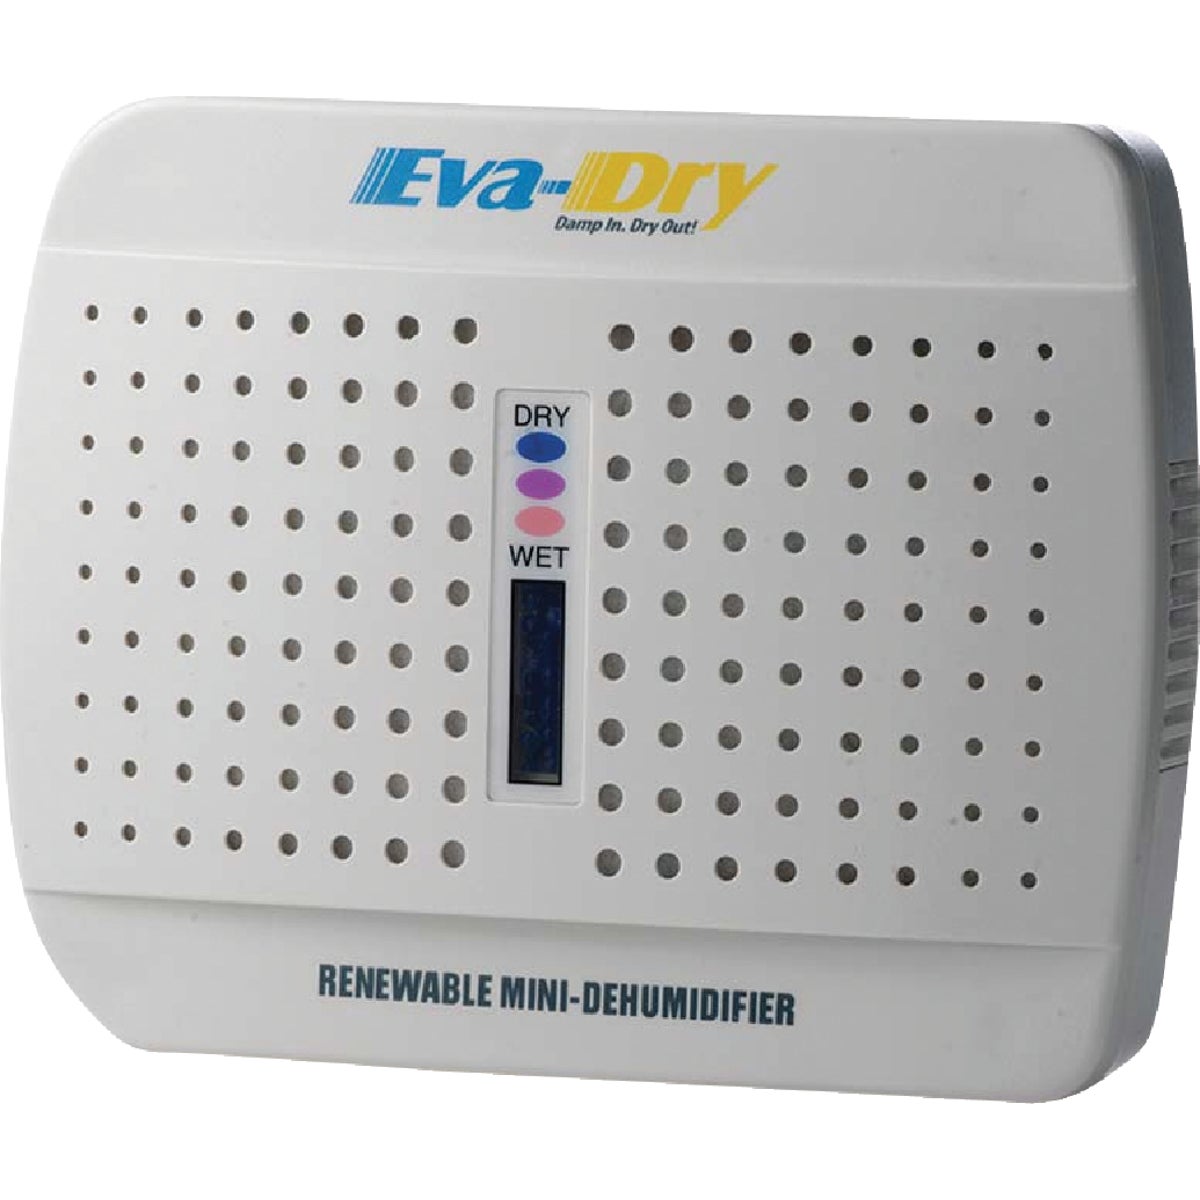 Eva-Dry 333 Cu. Ft. Coverage 20 to 30 Days Duration Renewable Mini Dehumidifier